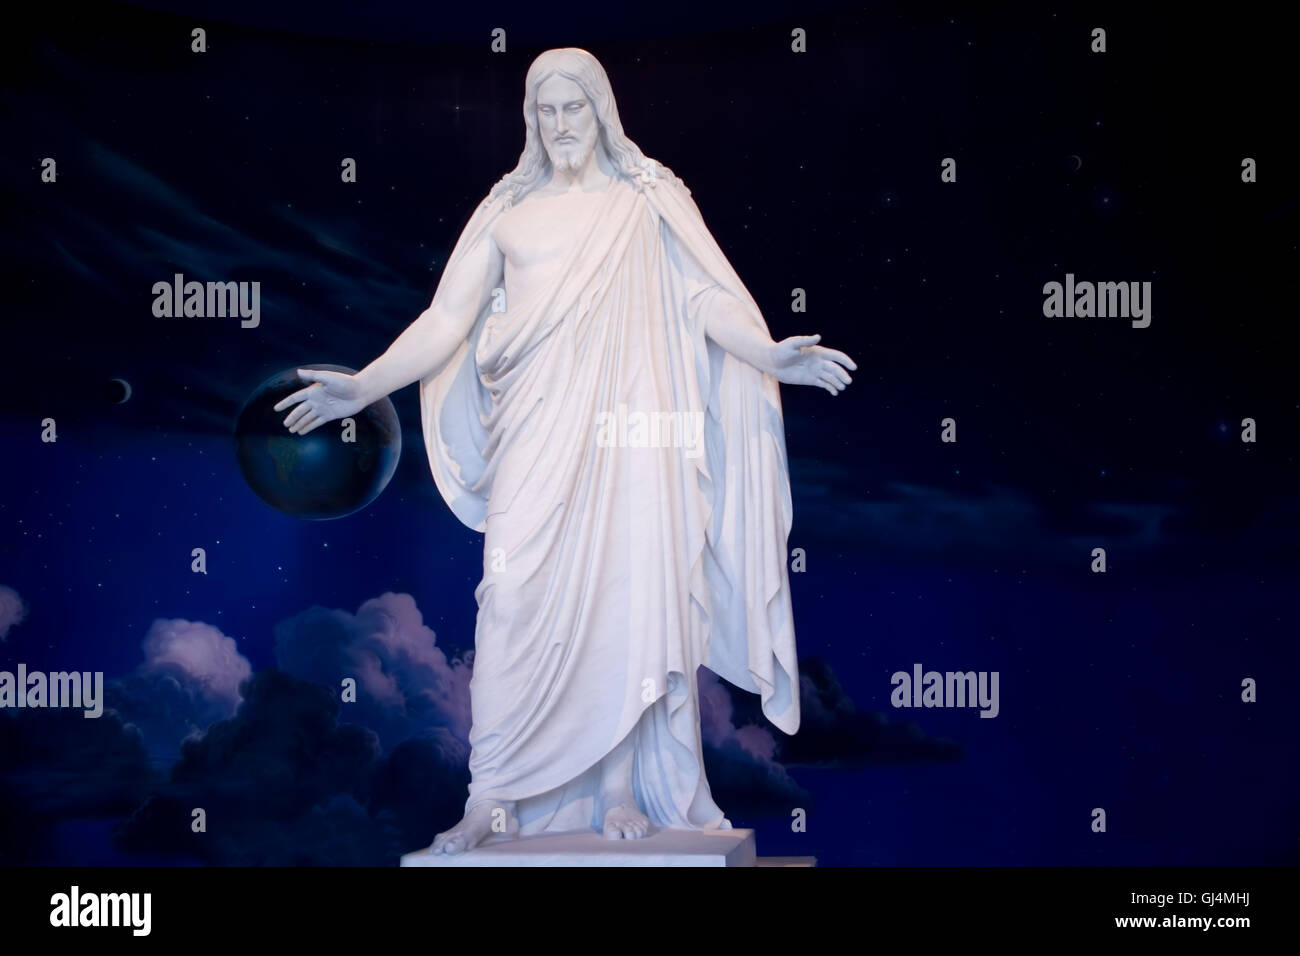 https://c8.alamy.com/comp/GJ4MHJ/statue-of-jesus-christ-in-the-salt-lake-temple-GJ4MHJ.jpg